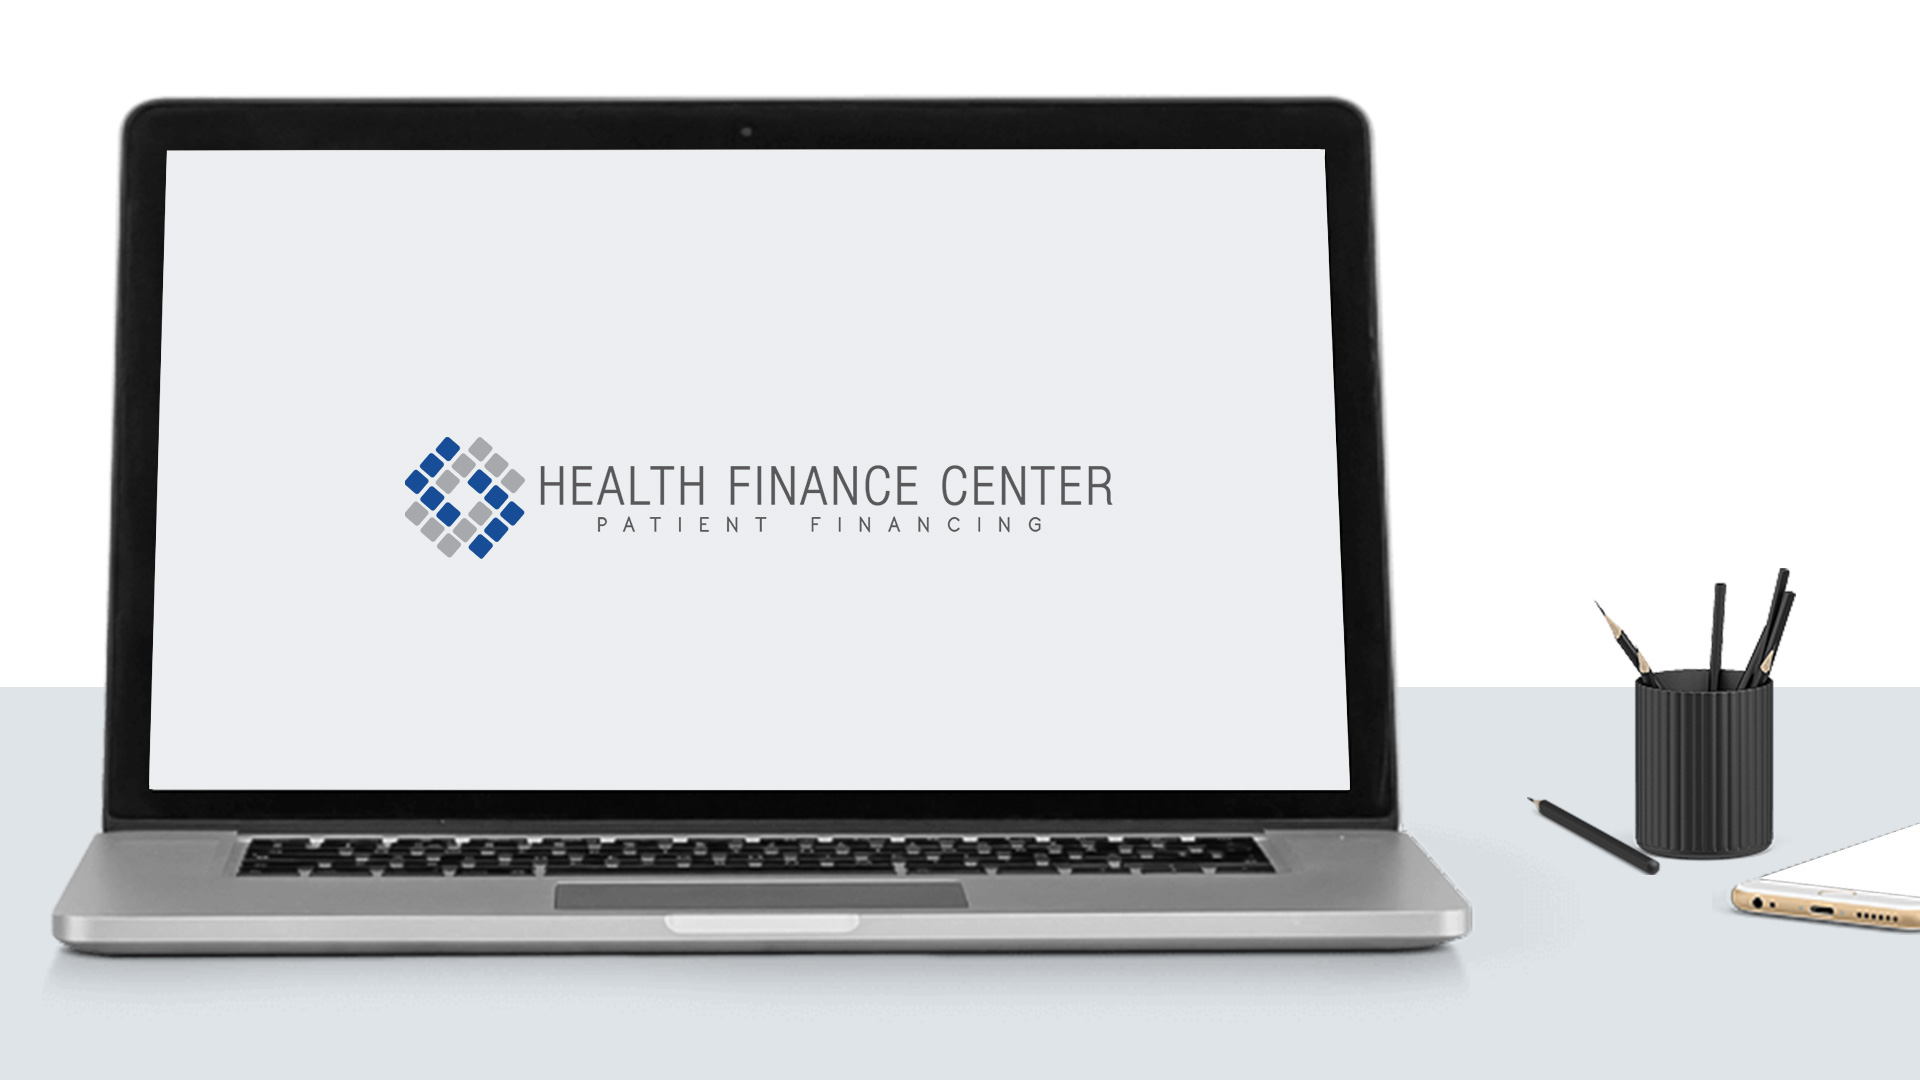 wp content uploads 2017 01 health finance center logo.jpg